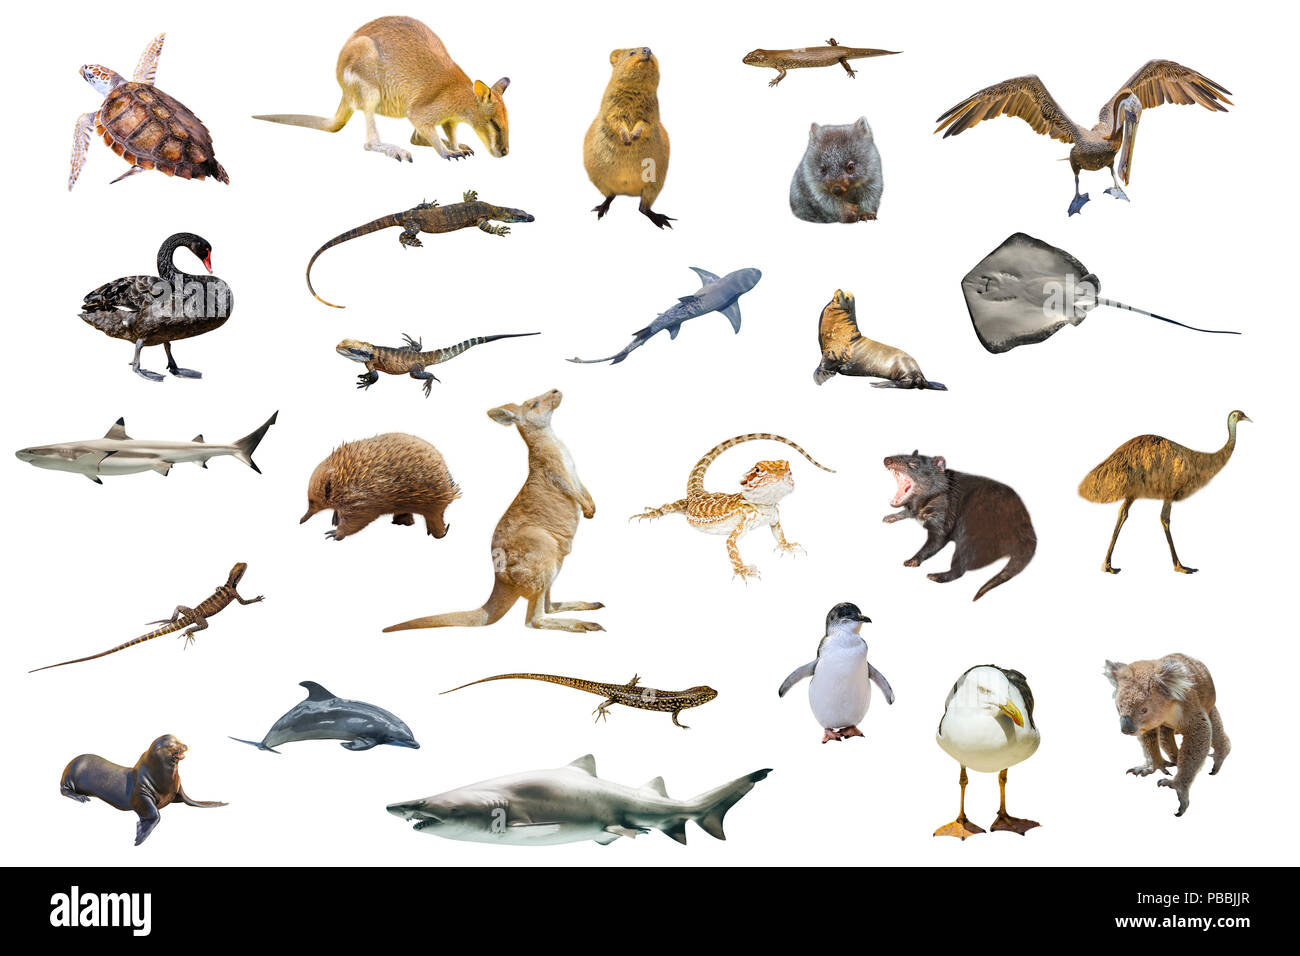 Australische Tiere auf weißem Hintergrund: Wallaby, Tasmanische Teufel, Wombats, Kängurus, Quokka, Koala, Pelikan, Seagull, Pinguin, Schwan, Haie, Stachelrochen, T Stockfoto